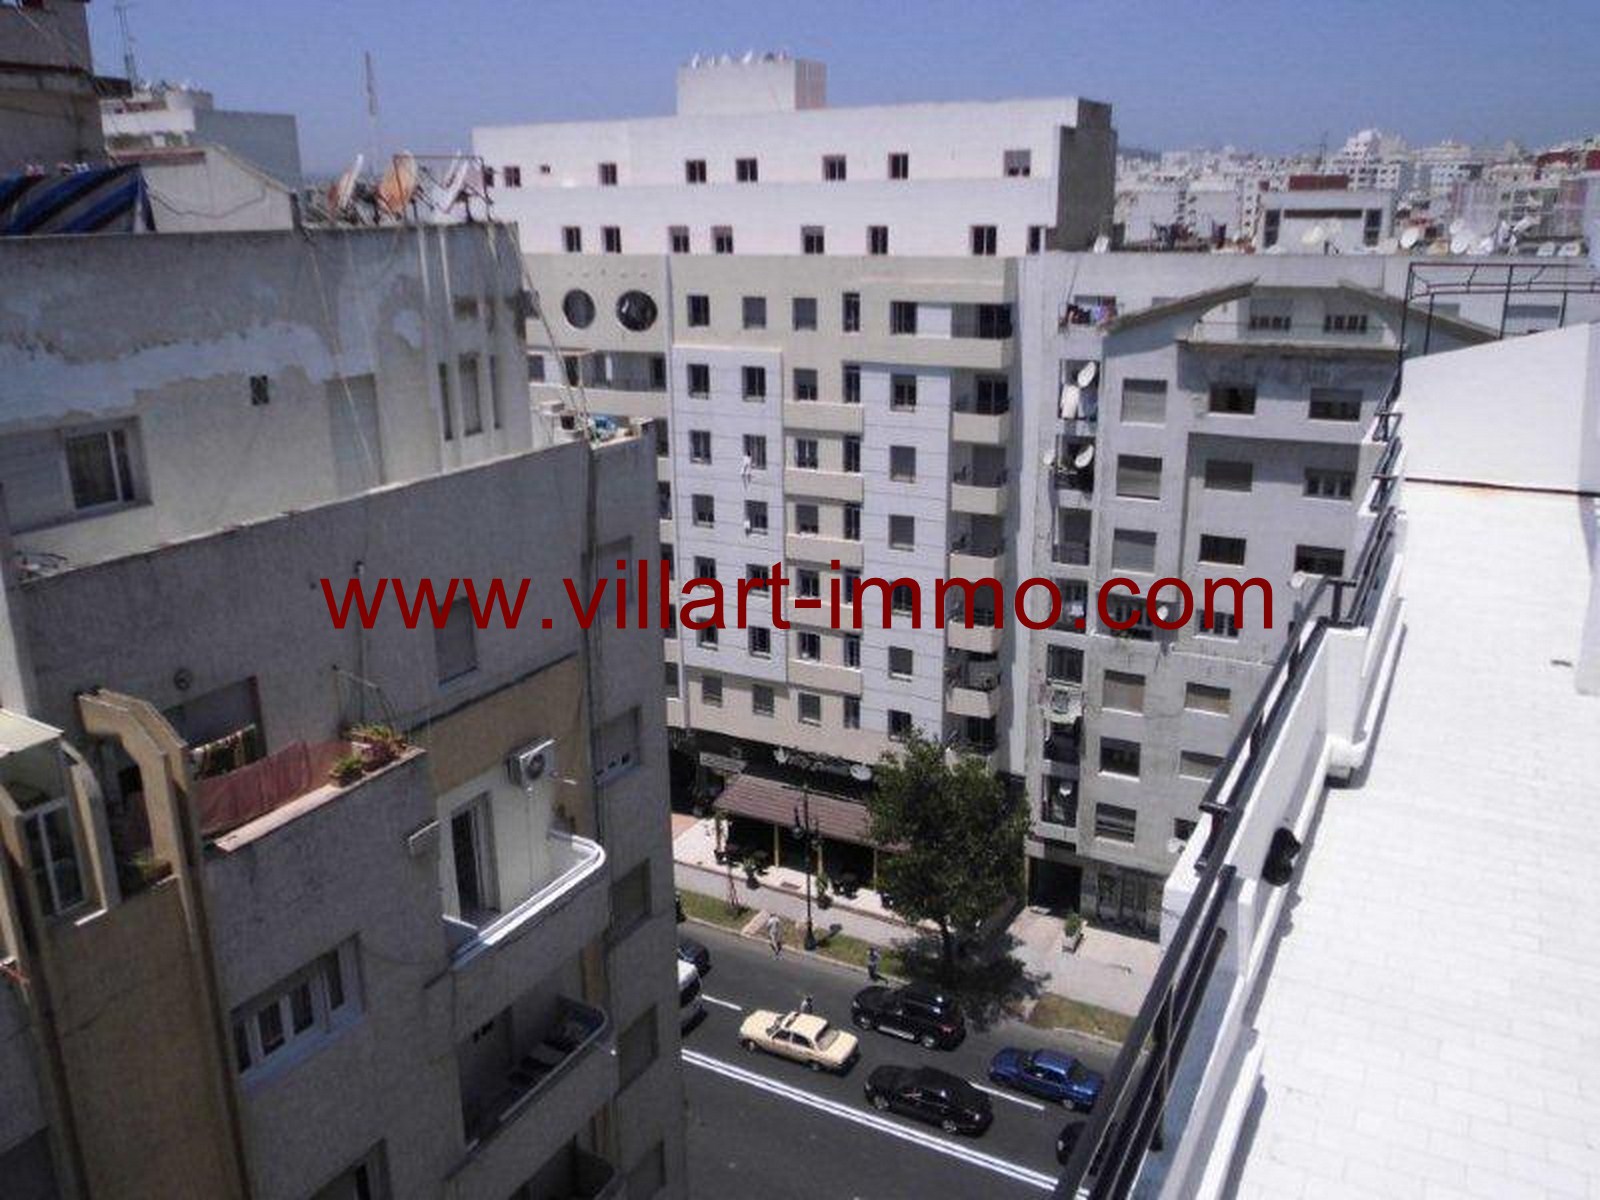 5-Vente -Appartement-Tanger-Maroc-Centre-De-Ville-Vue-VA134-Villartimmo